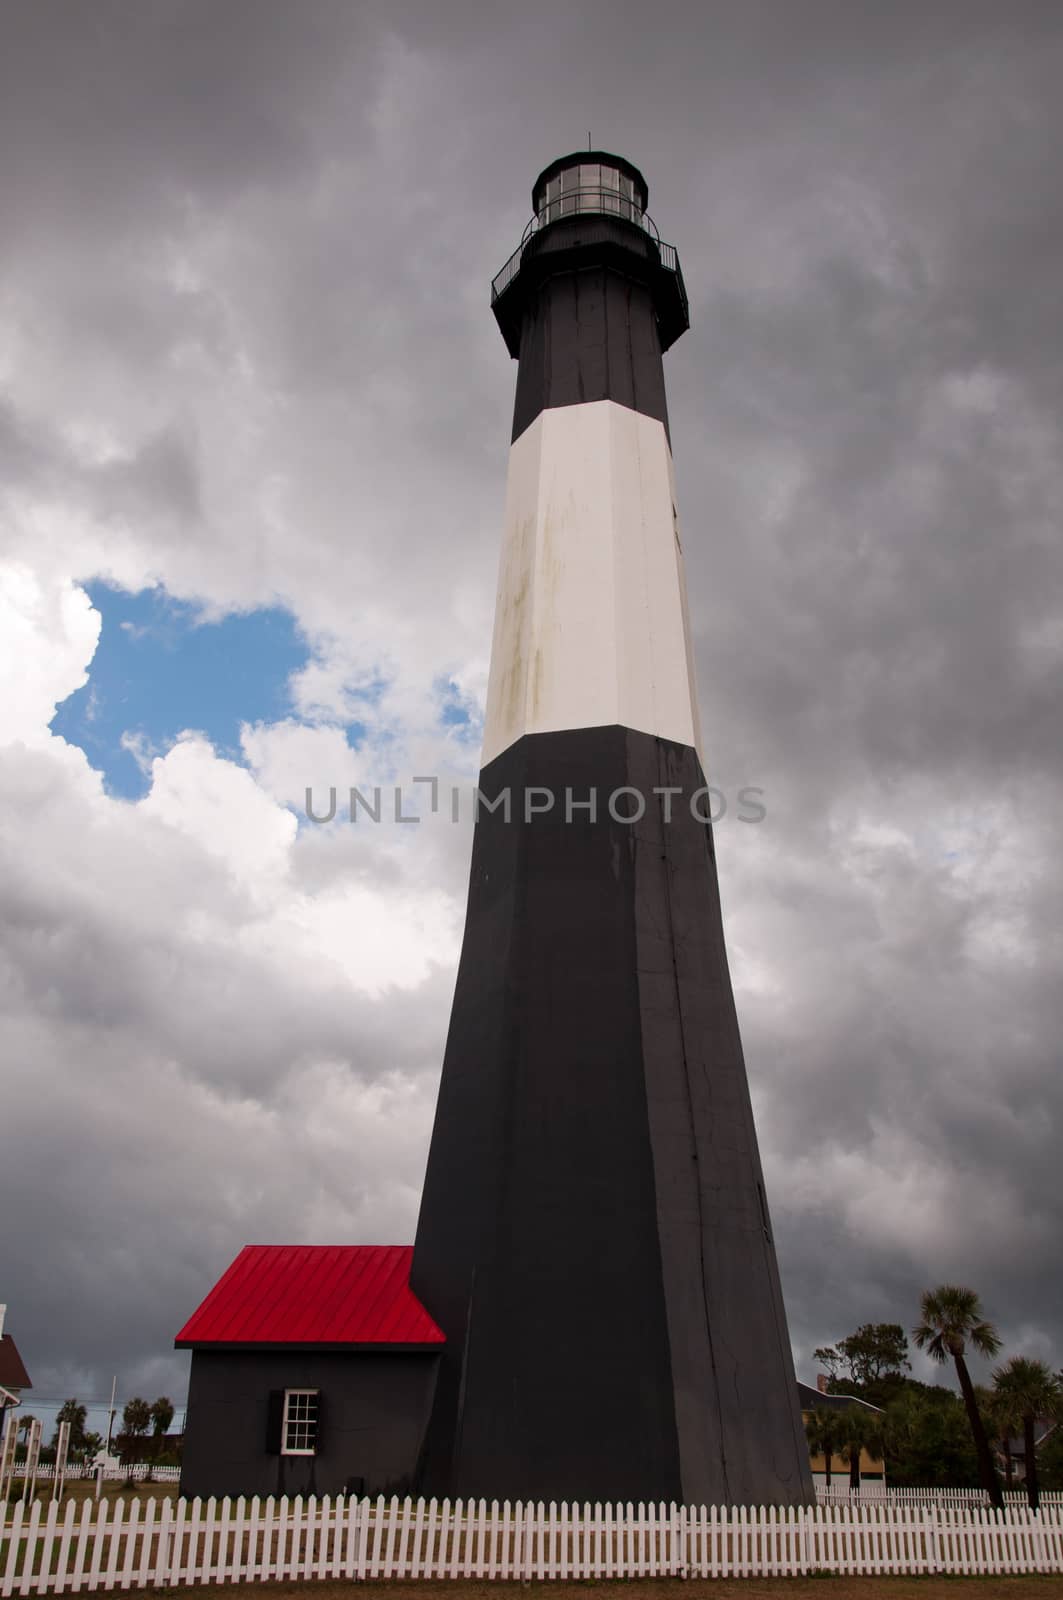 Tybee Island lighthouse at Tybee Island, Georgia.